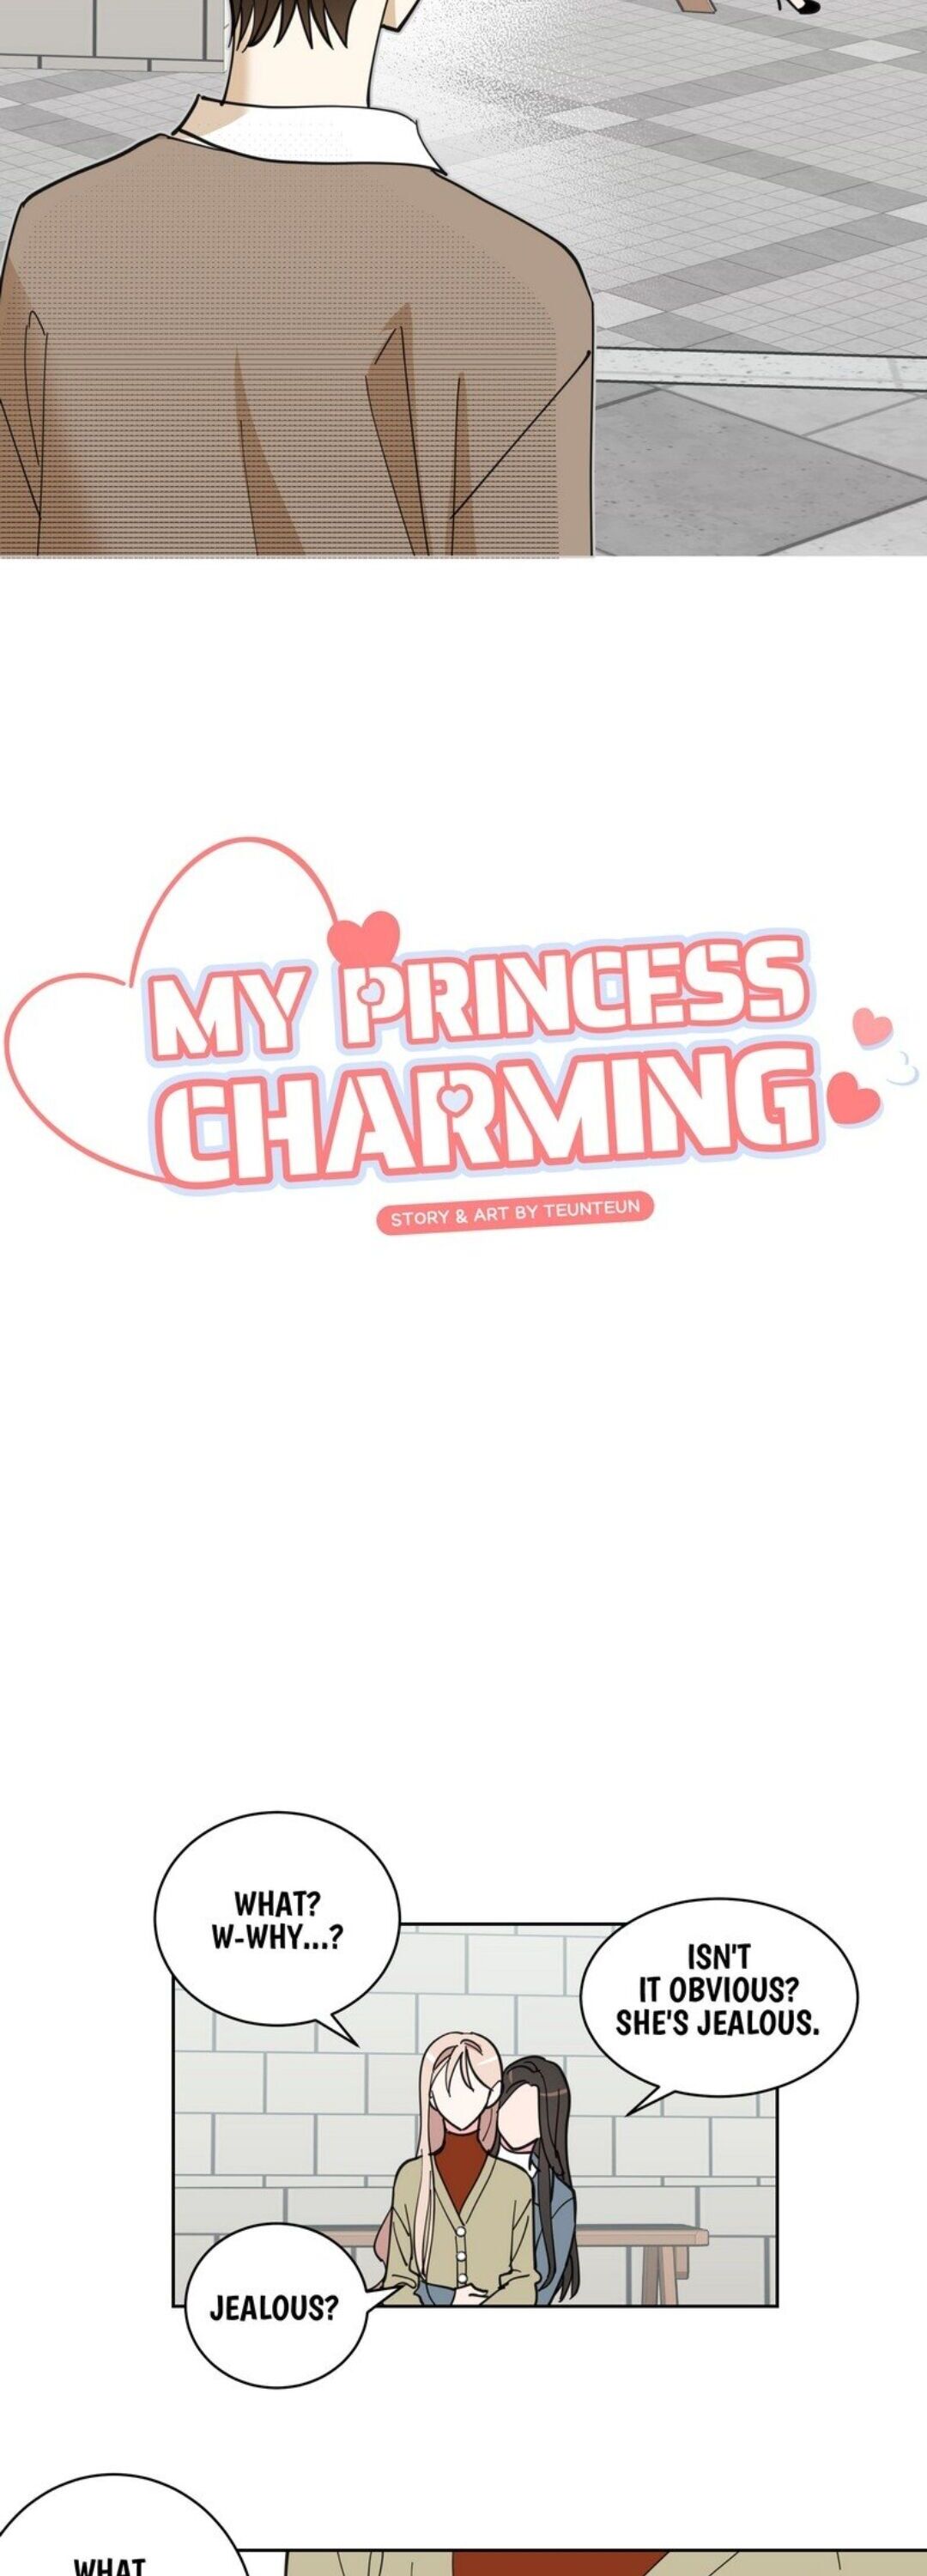 My Princess Charming - Page 2